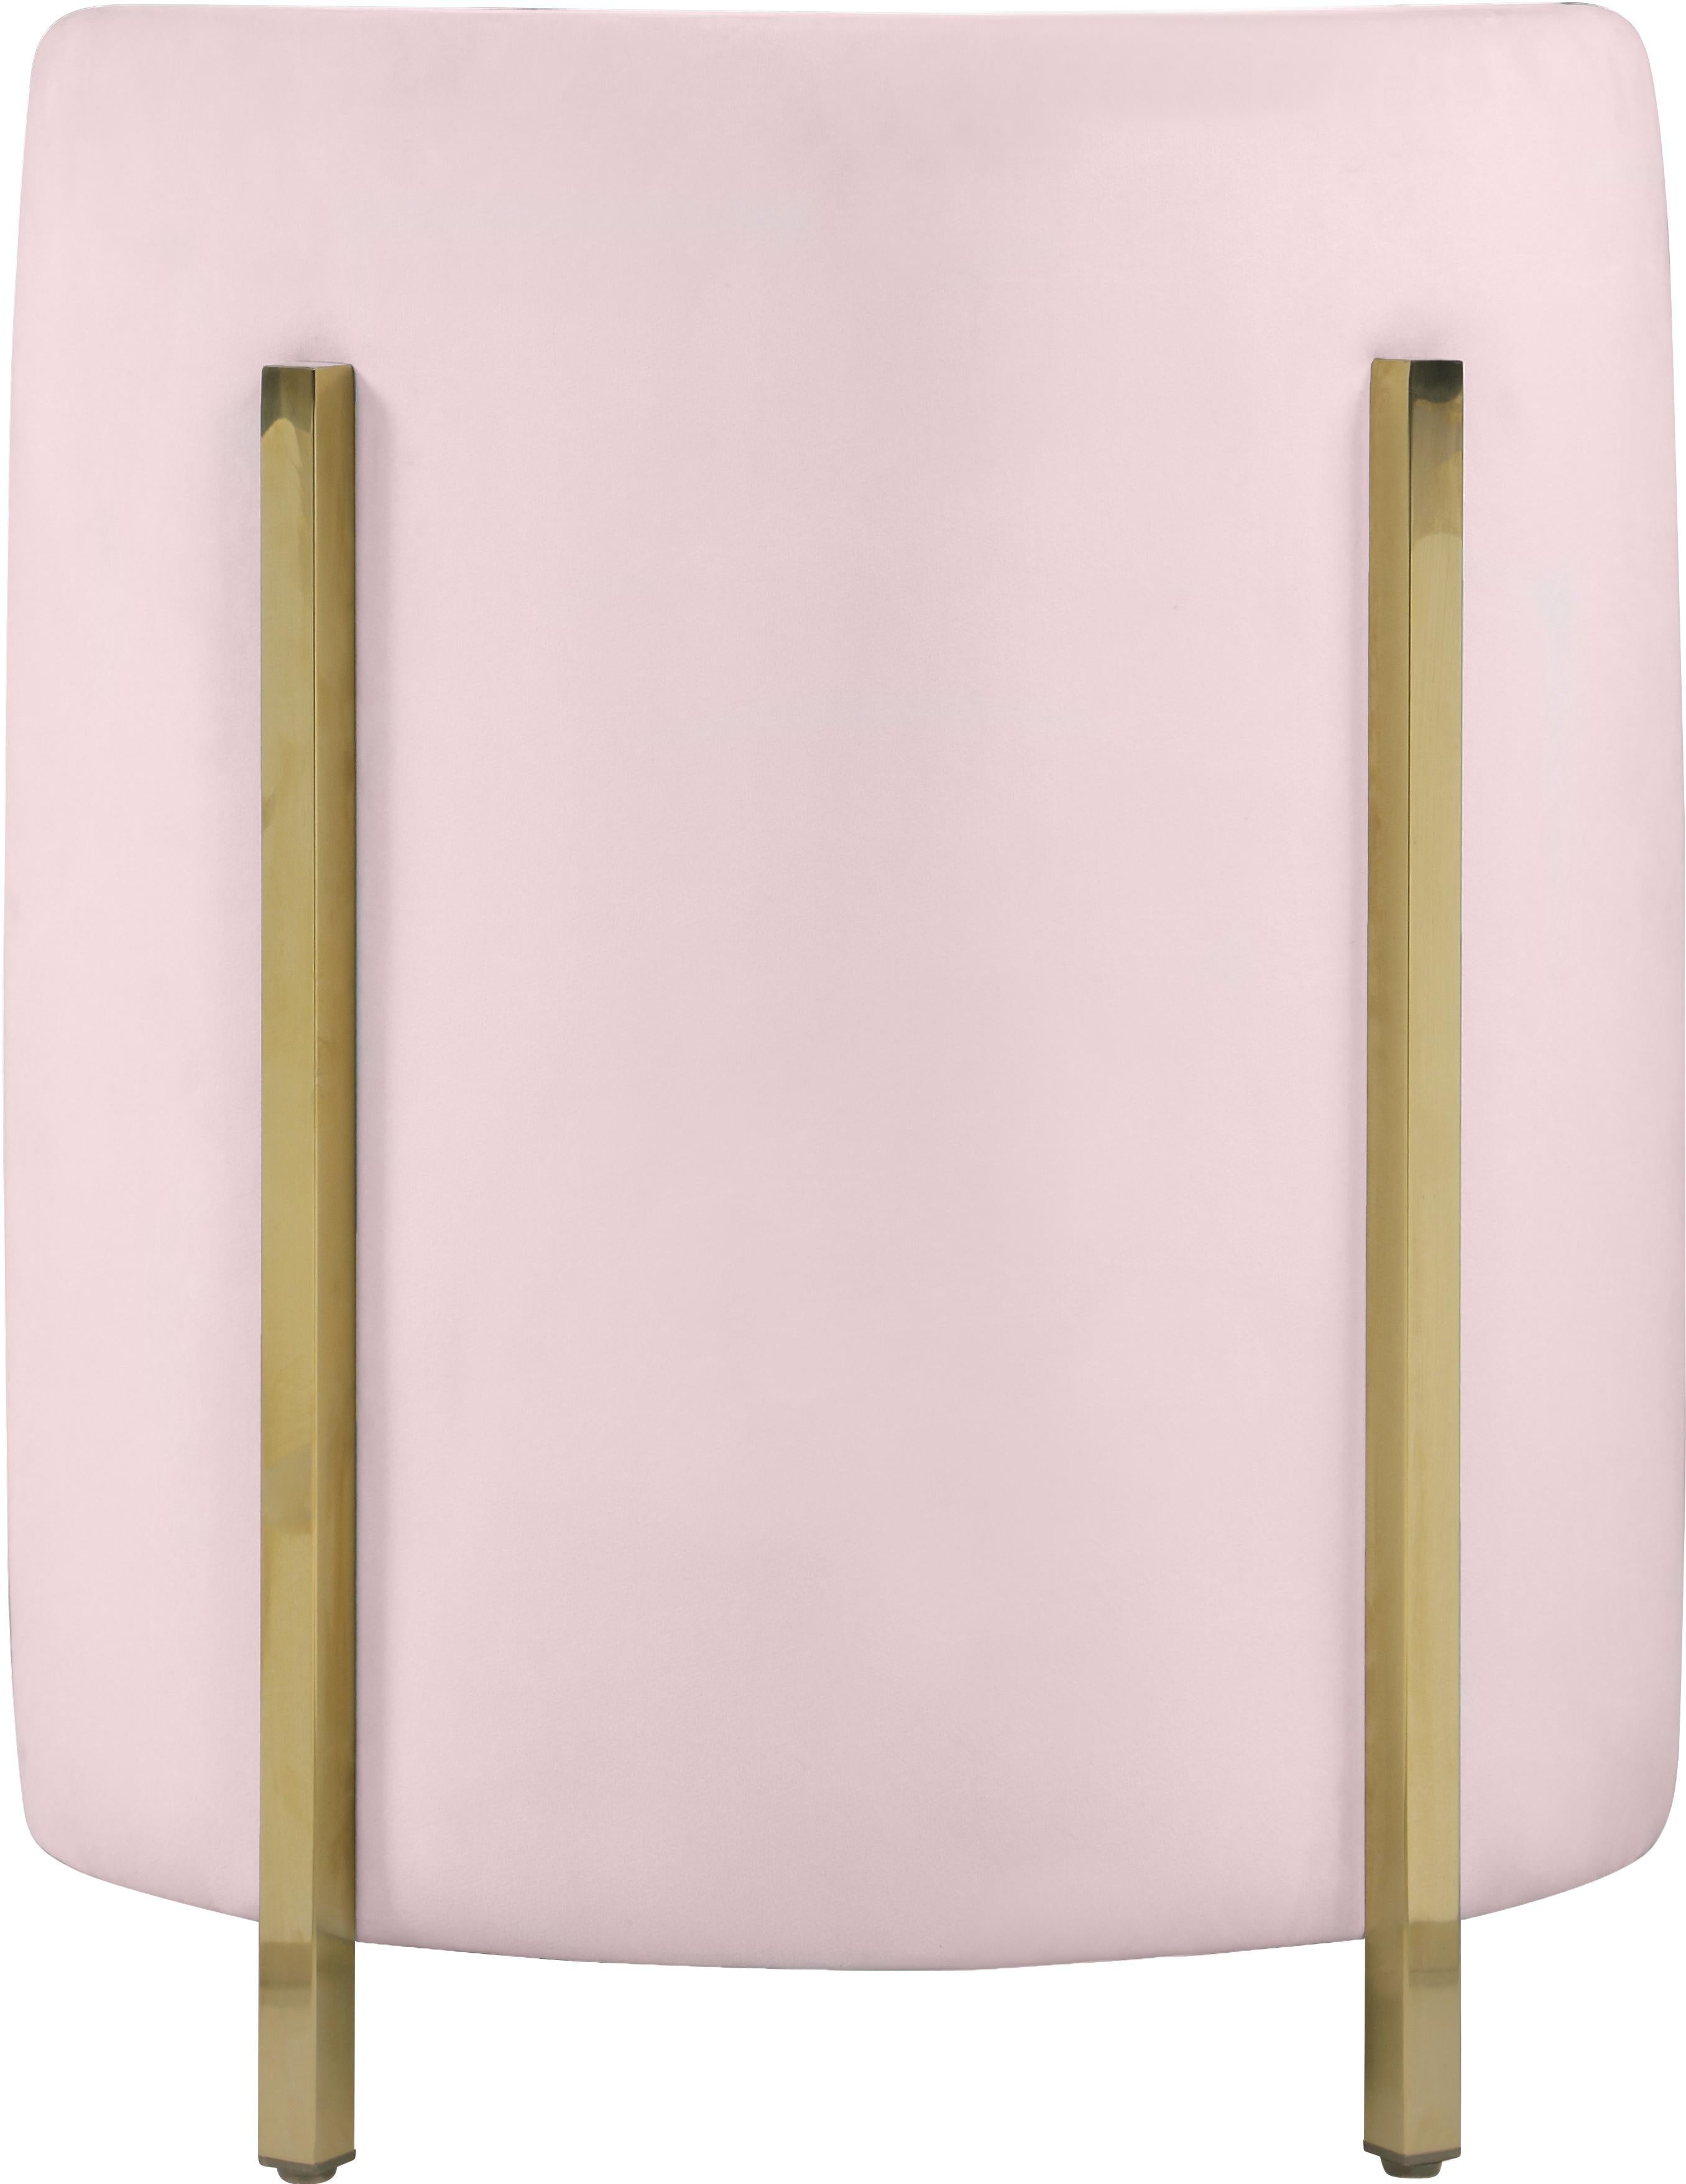 Rotunda Pink Velvet Accent Chair